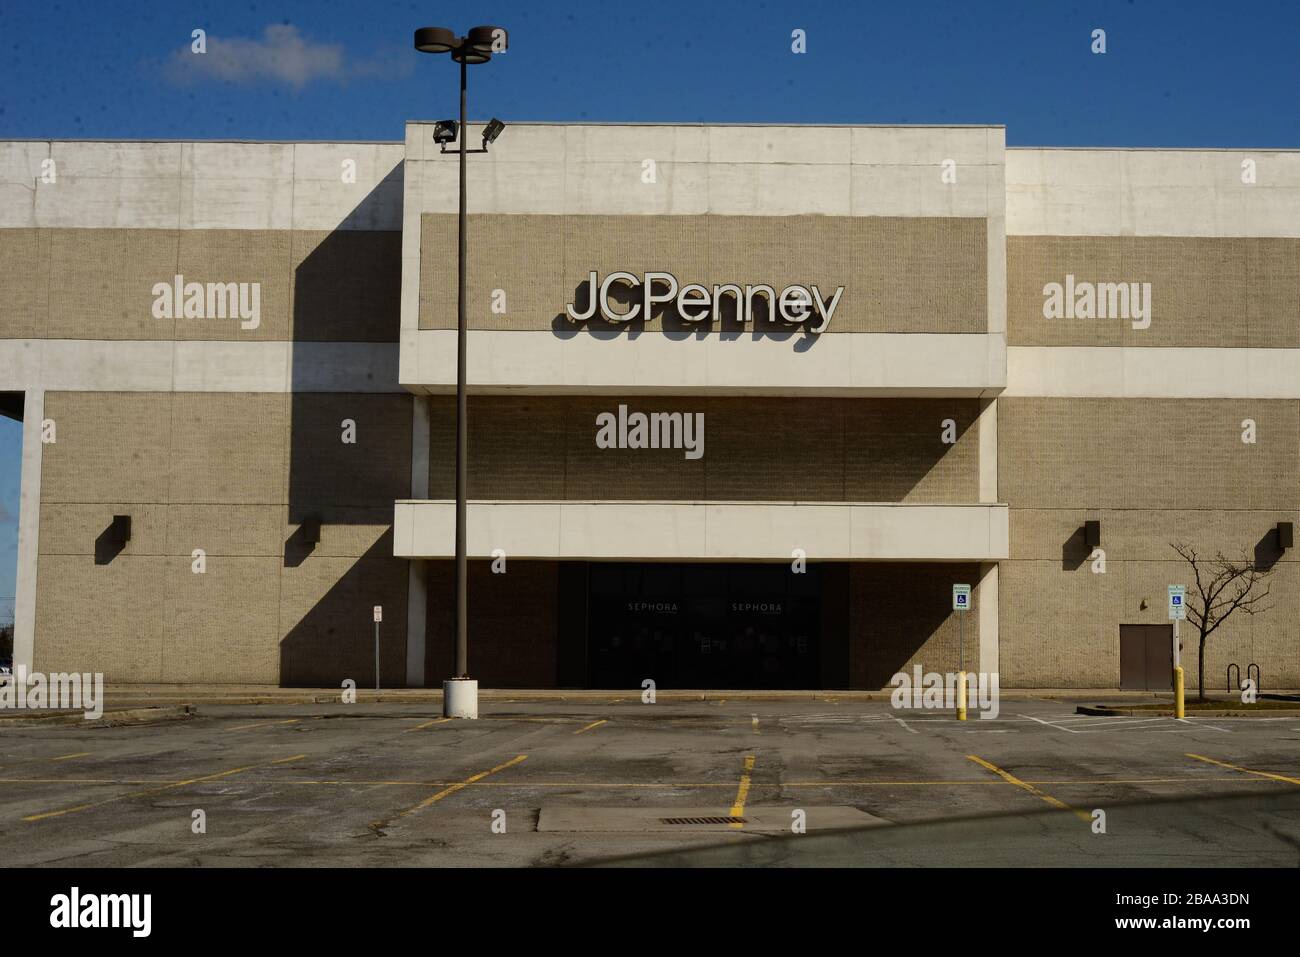 Covid 19, verlassener Parkplatz in Mall, Amherst NY, Boulevard Mall, 2020 Pandemie Stockfoto